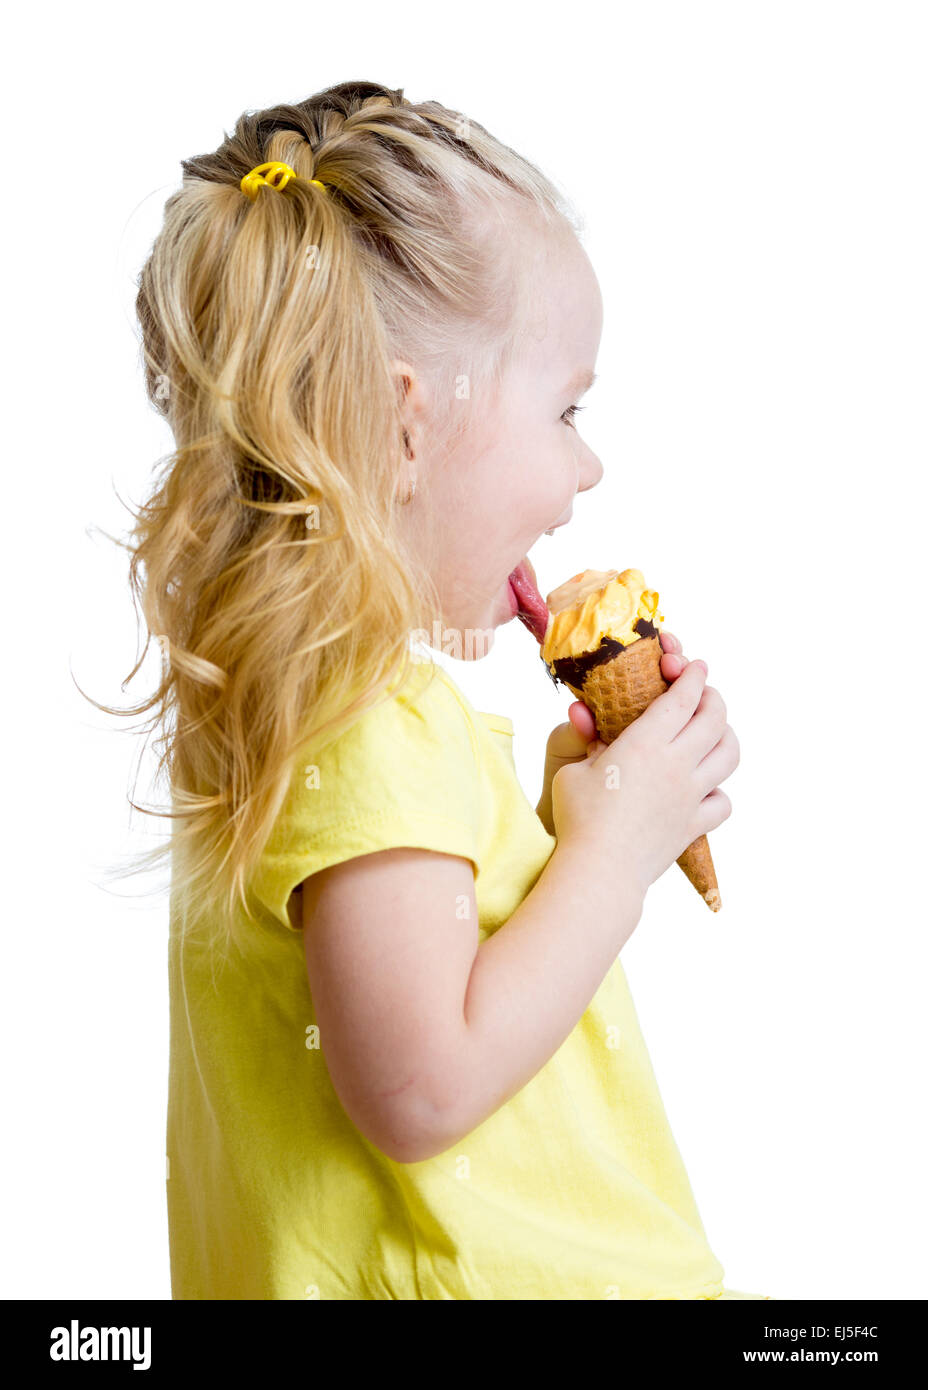 side of kid eating ice cream Stock Photo